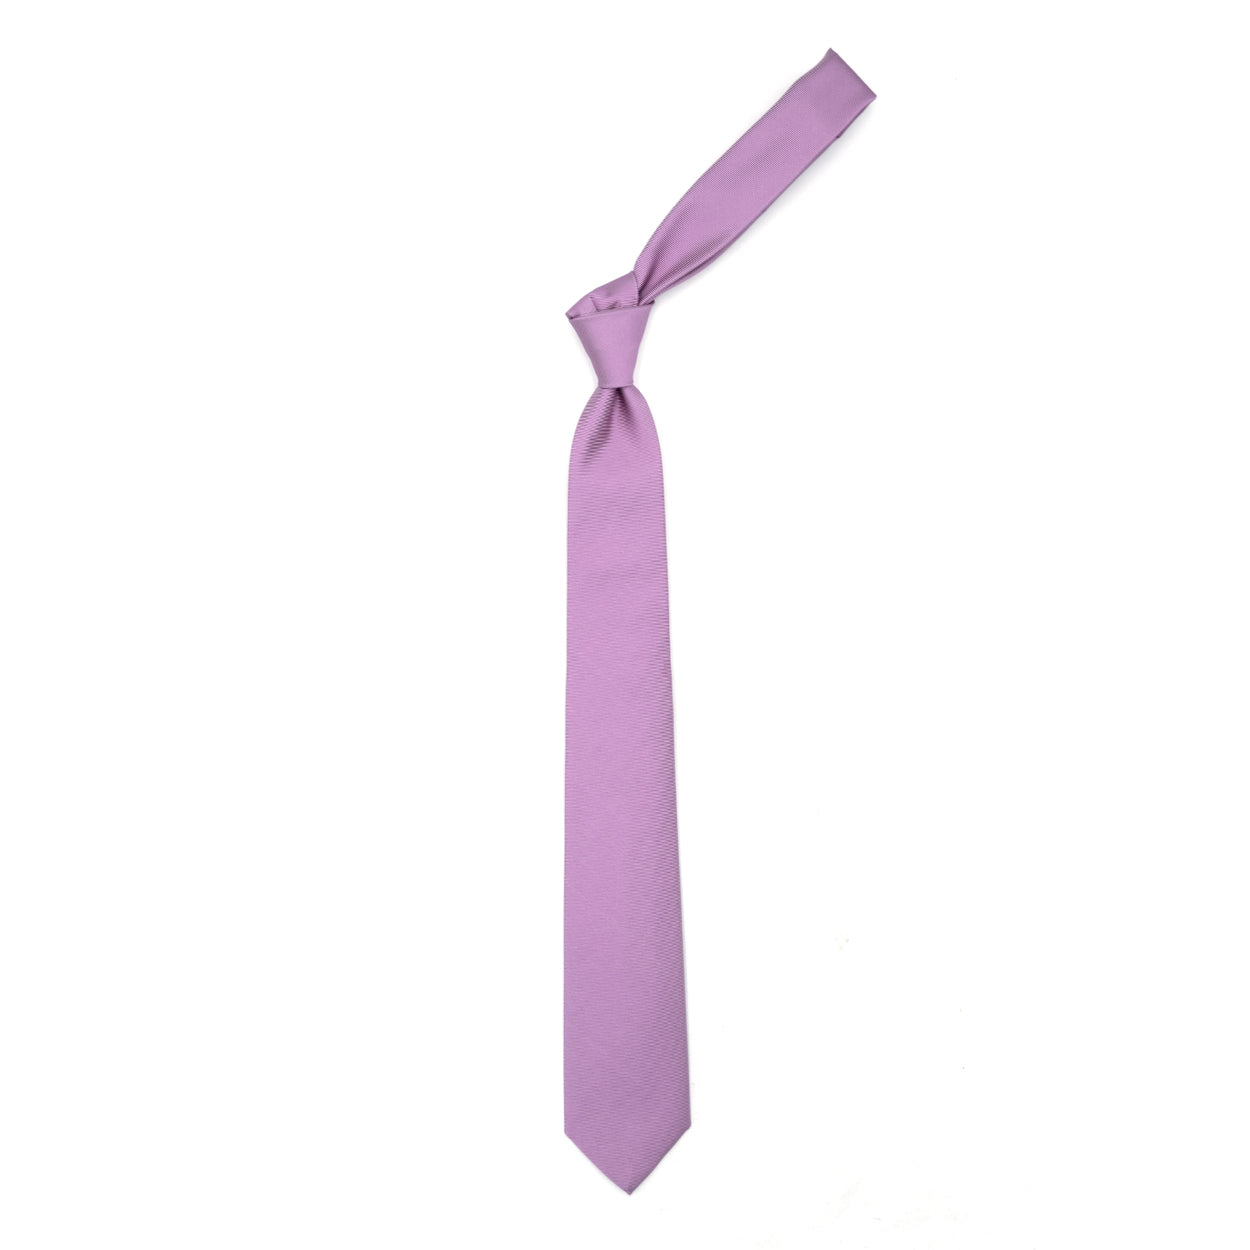 Solid pink tie